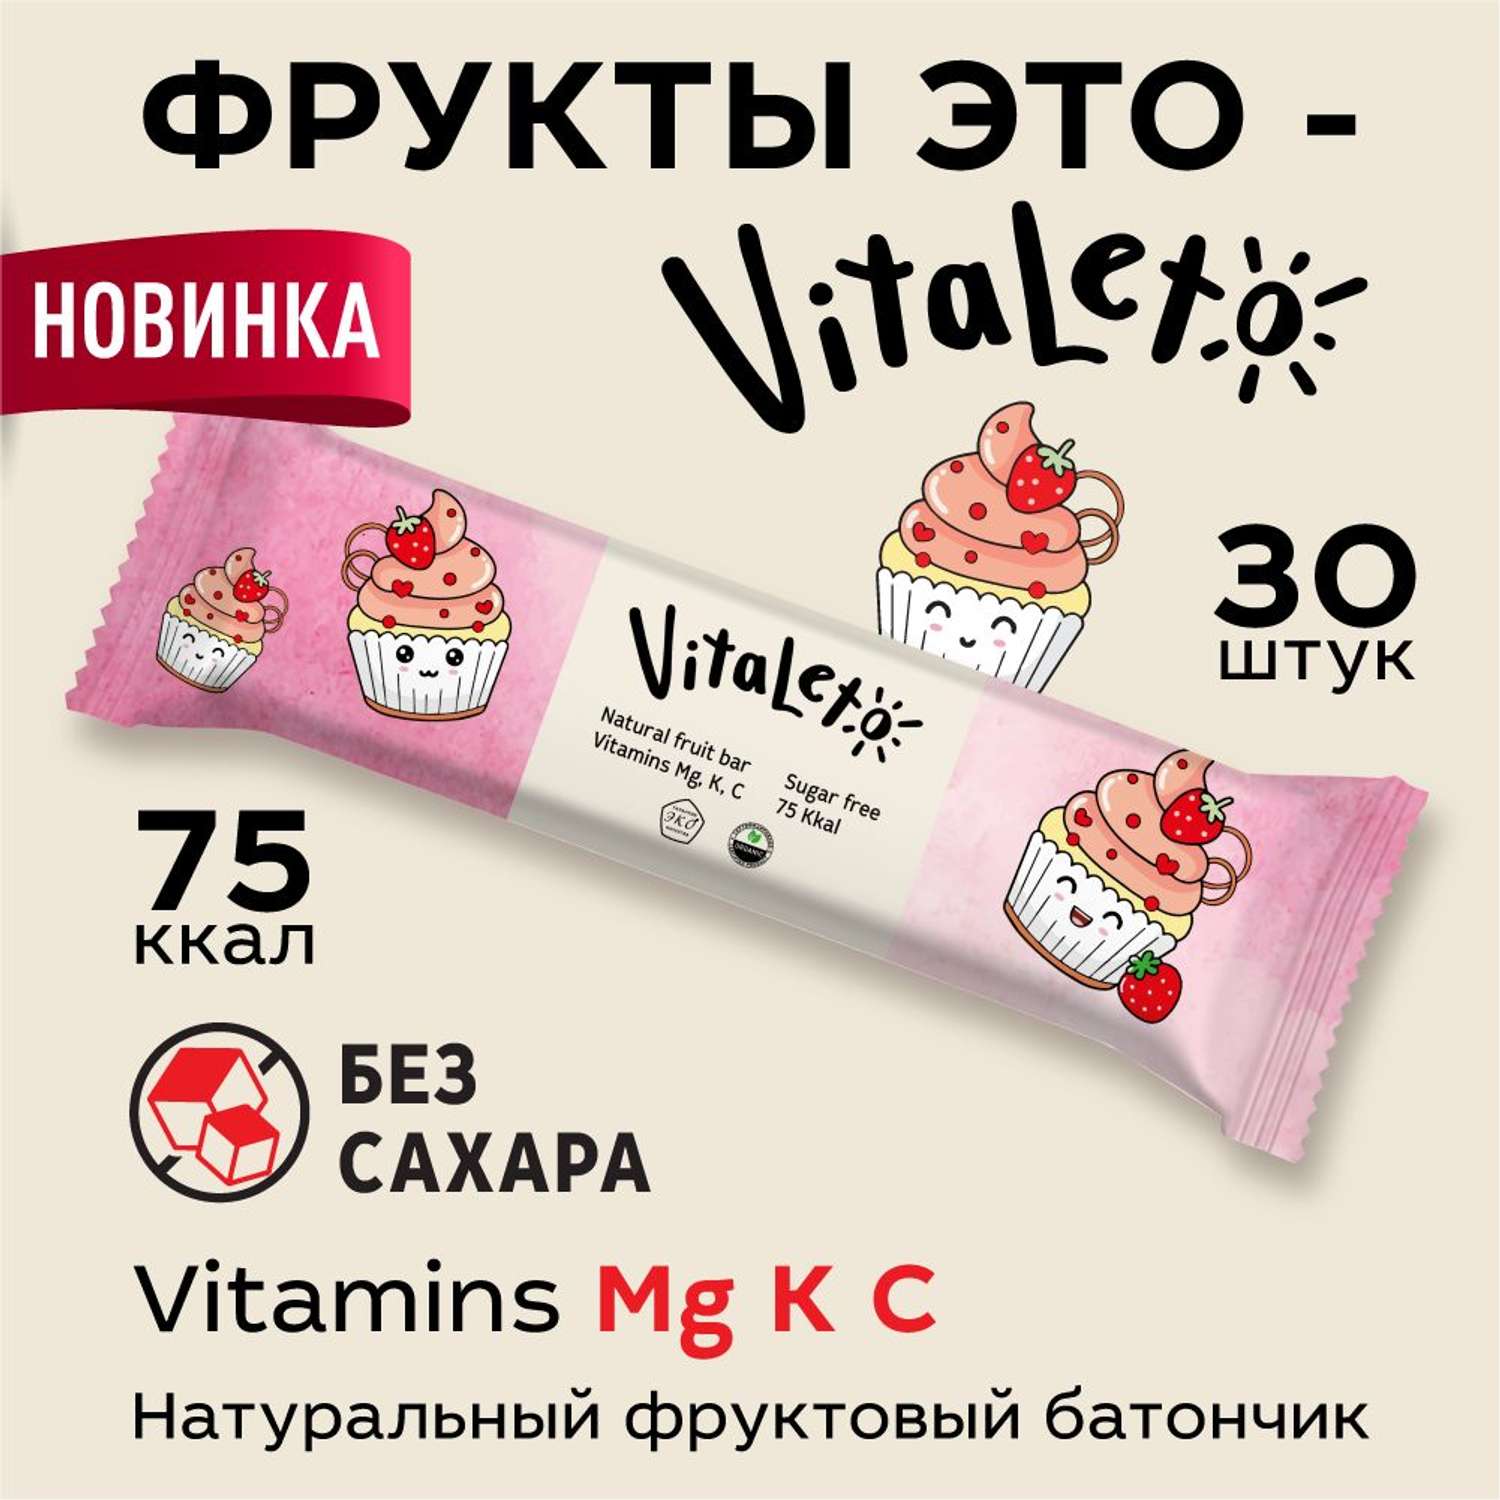 Фруктовый батончик VitaLeto без сахара Клубничный десерт 30 шт х 30 гр - фото 2